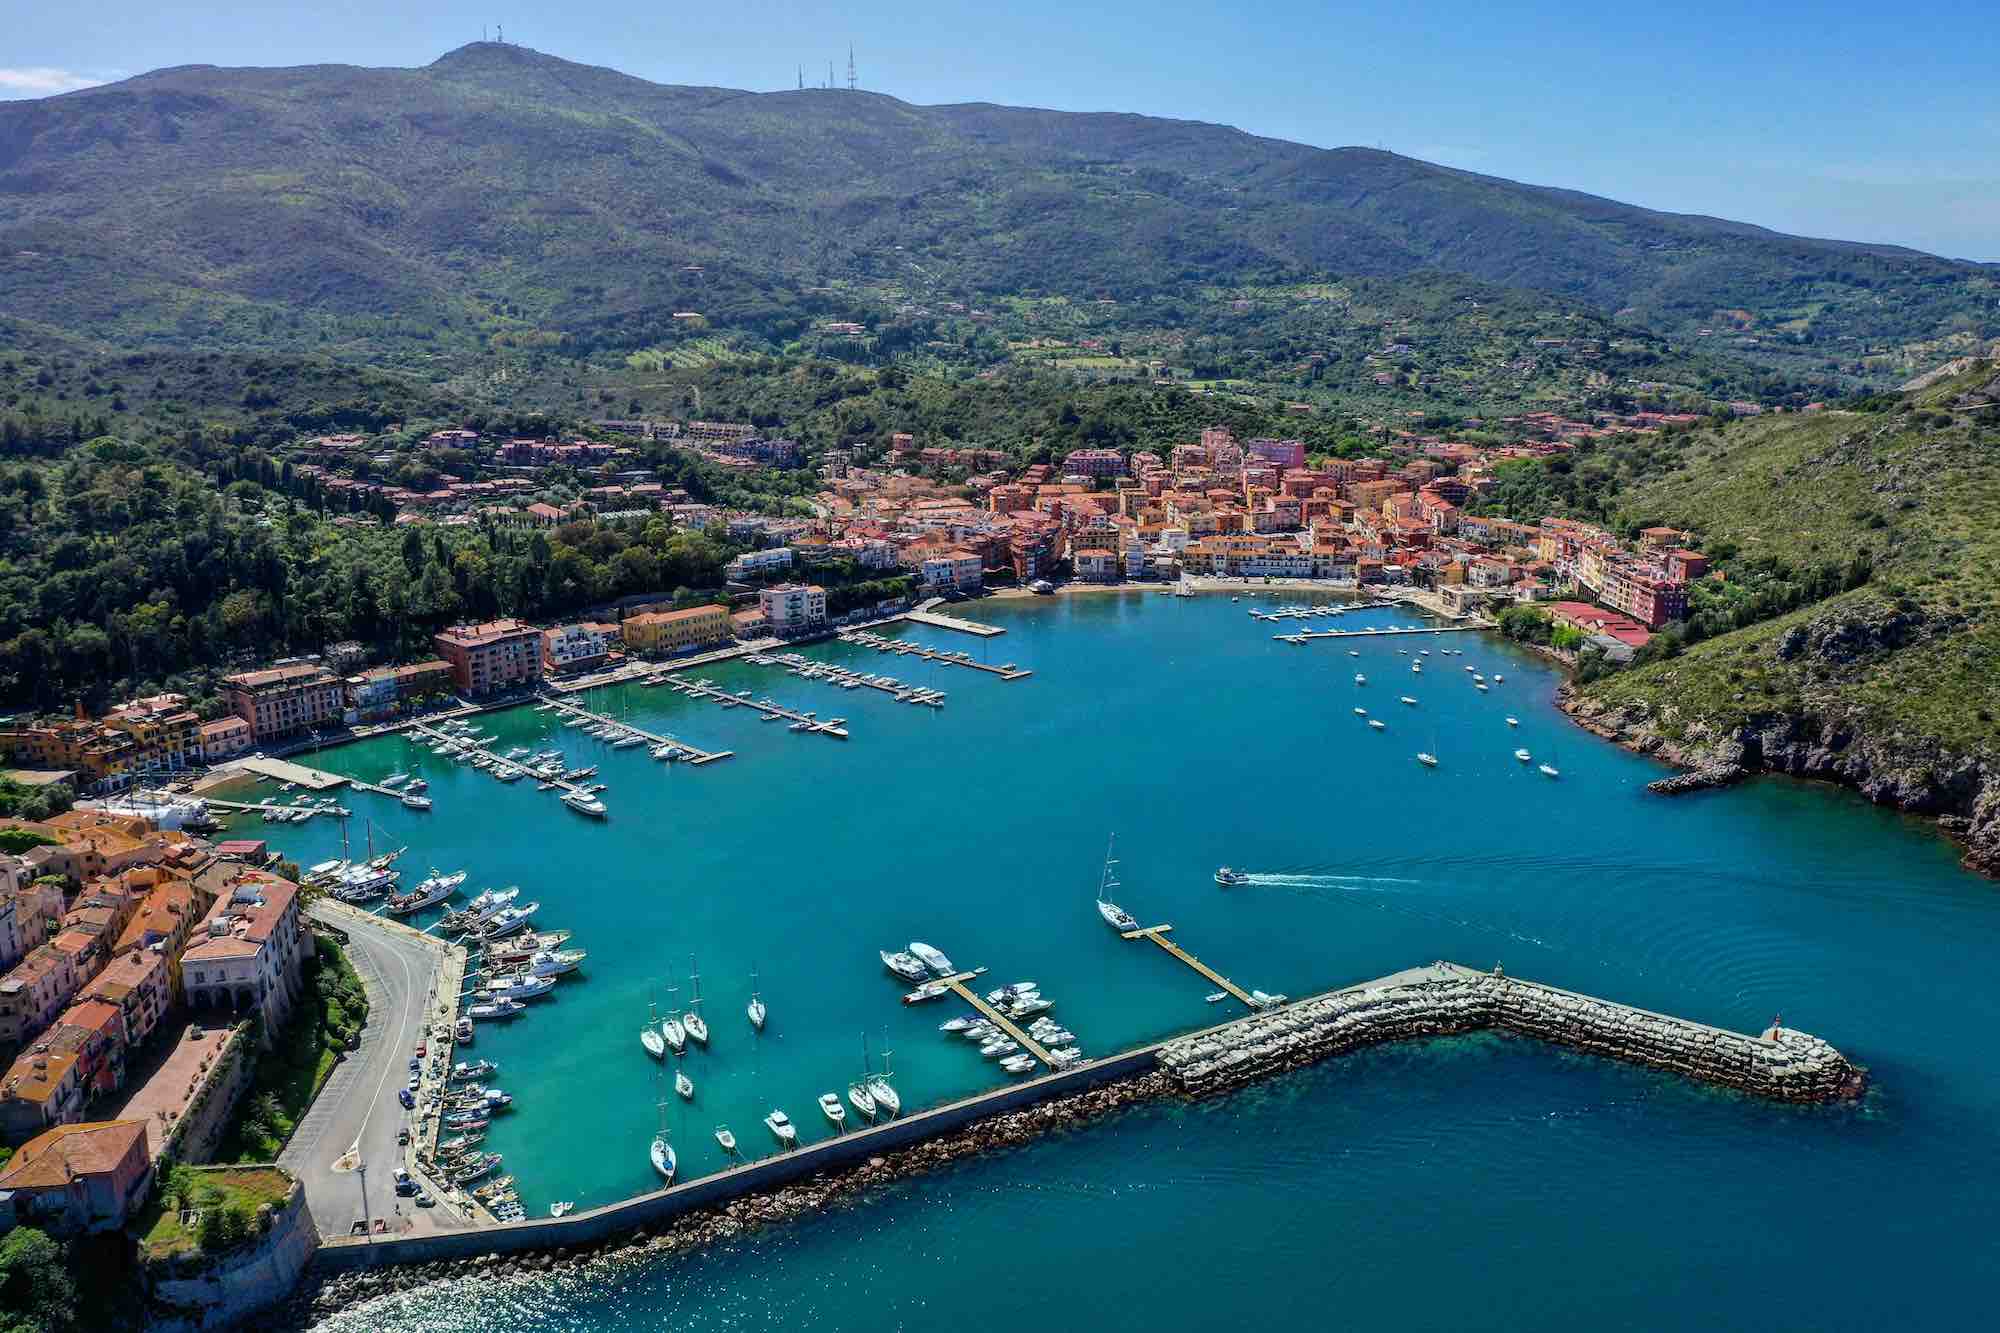 Vista su Porto Ercole, borgo marinaro in Toscana all'Argentario